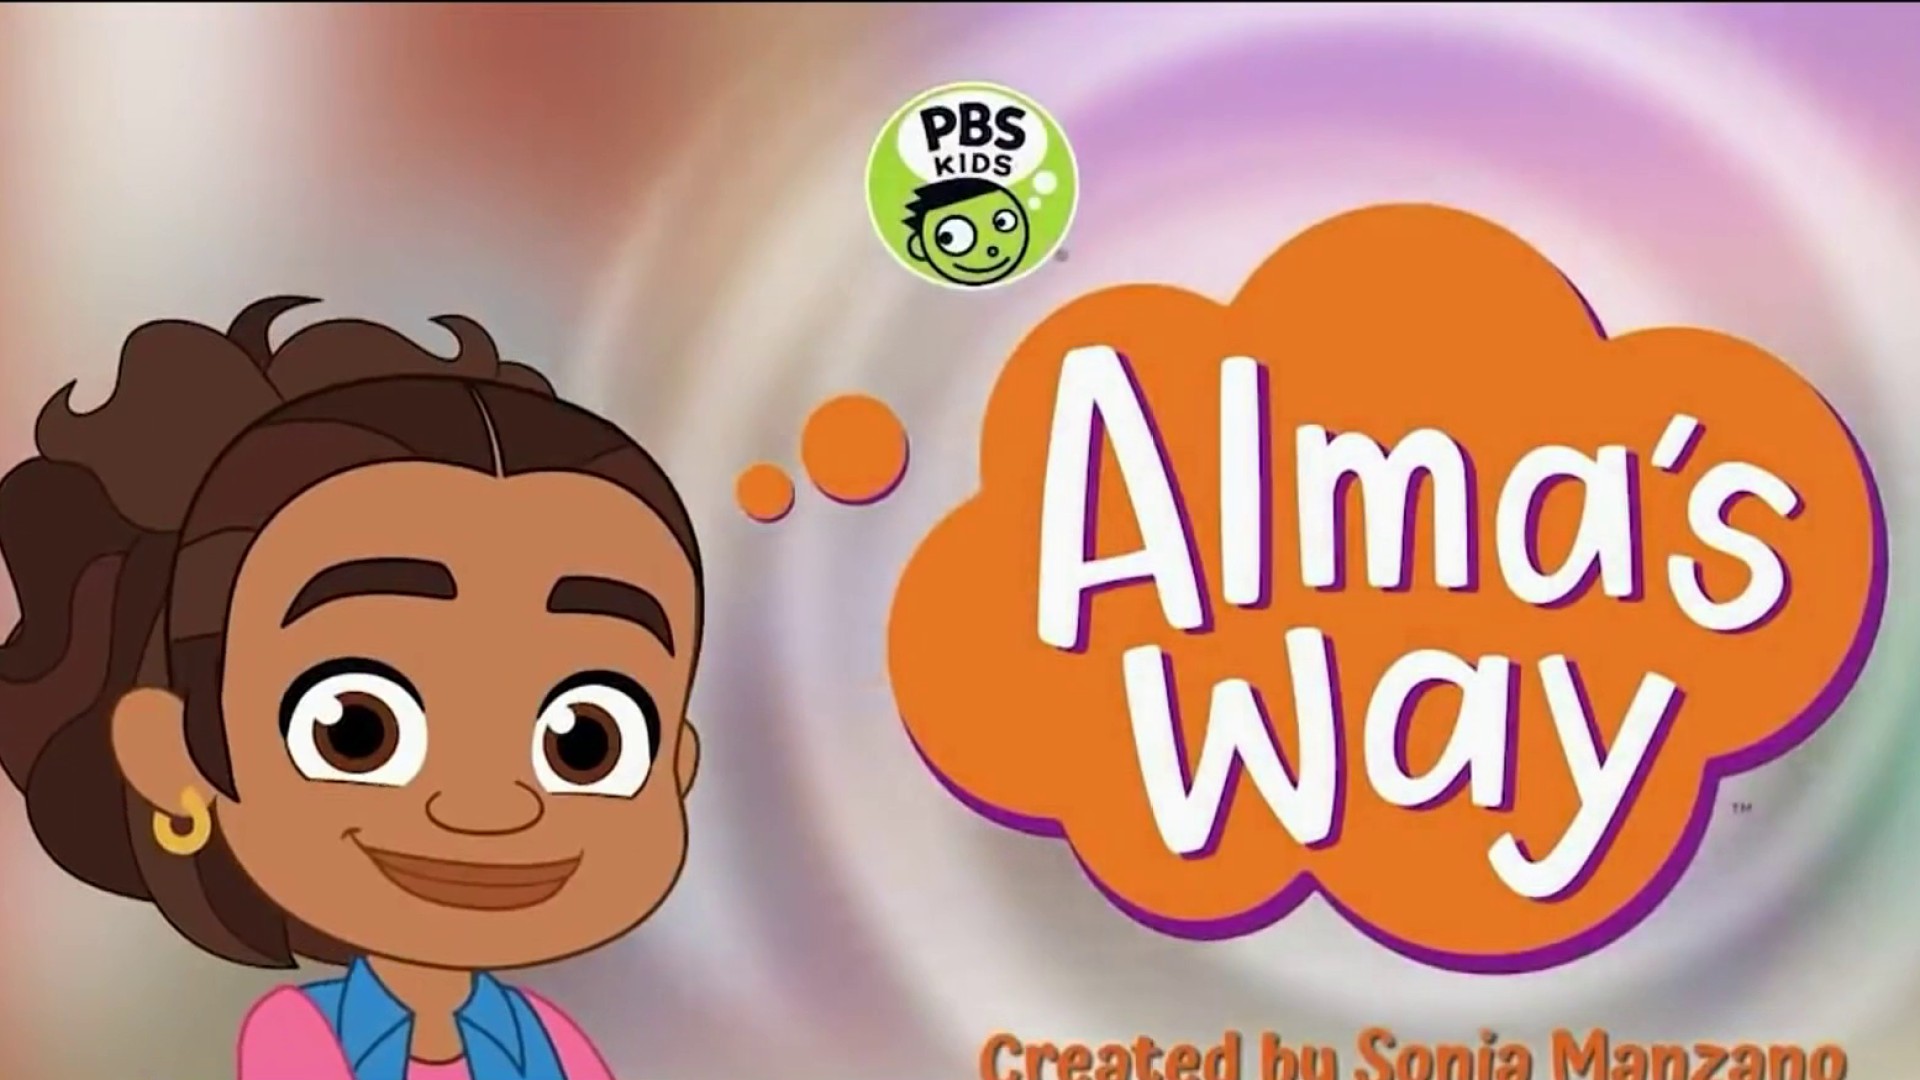 Alma's Way' Teaching Kids Problem Solving Skills